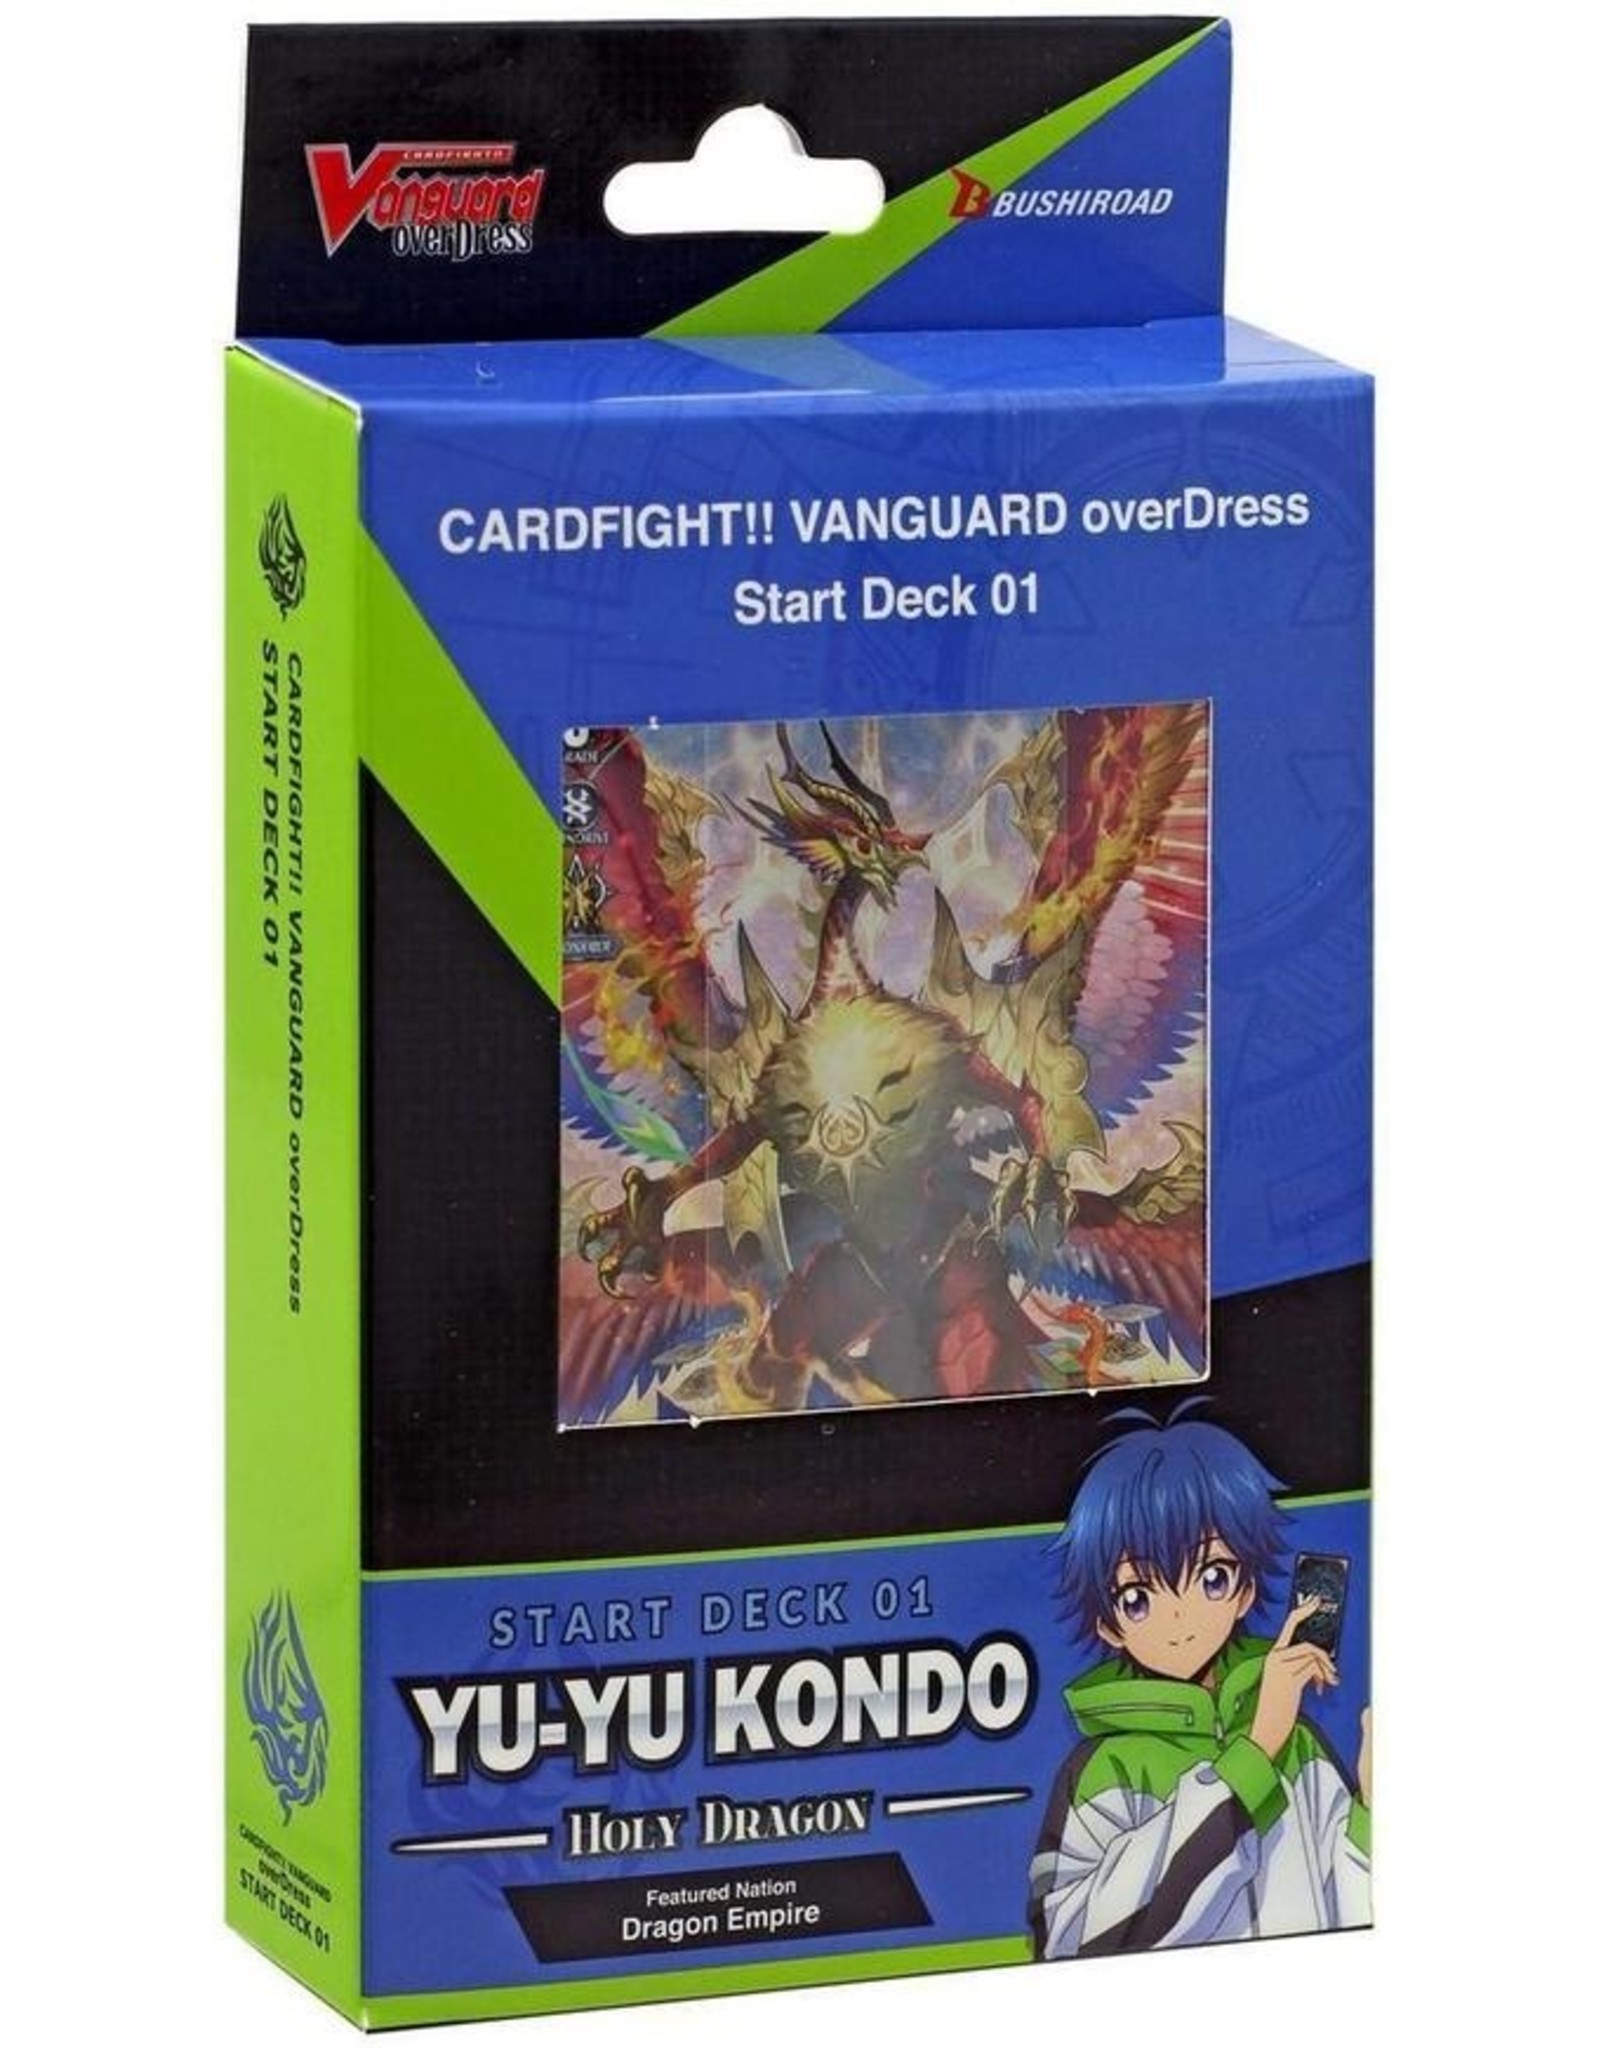 Vanguard OverDress Deck 01: Holy Dragon